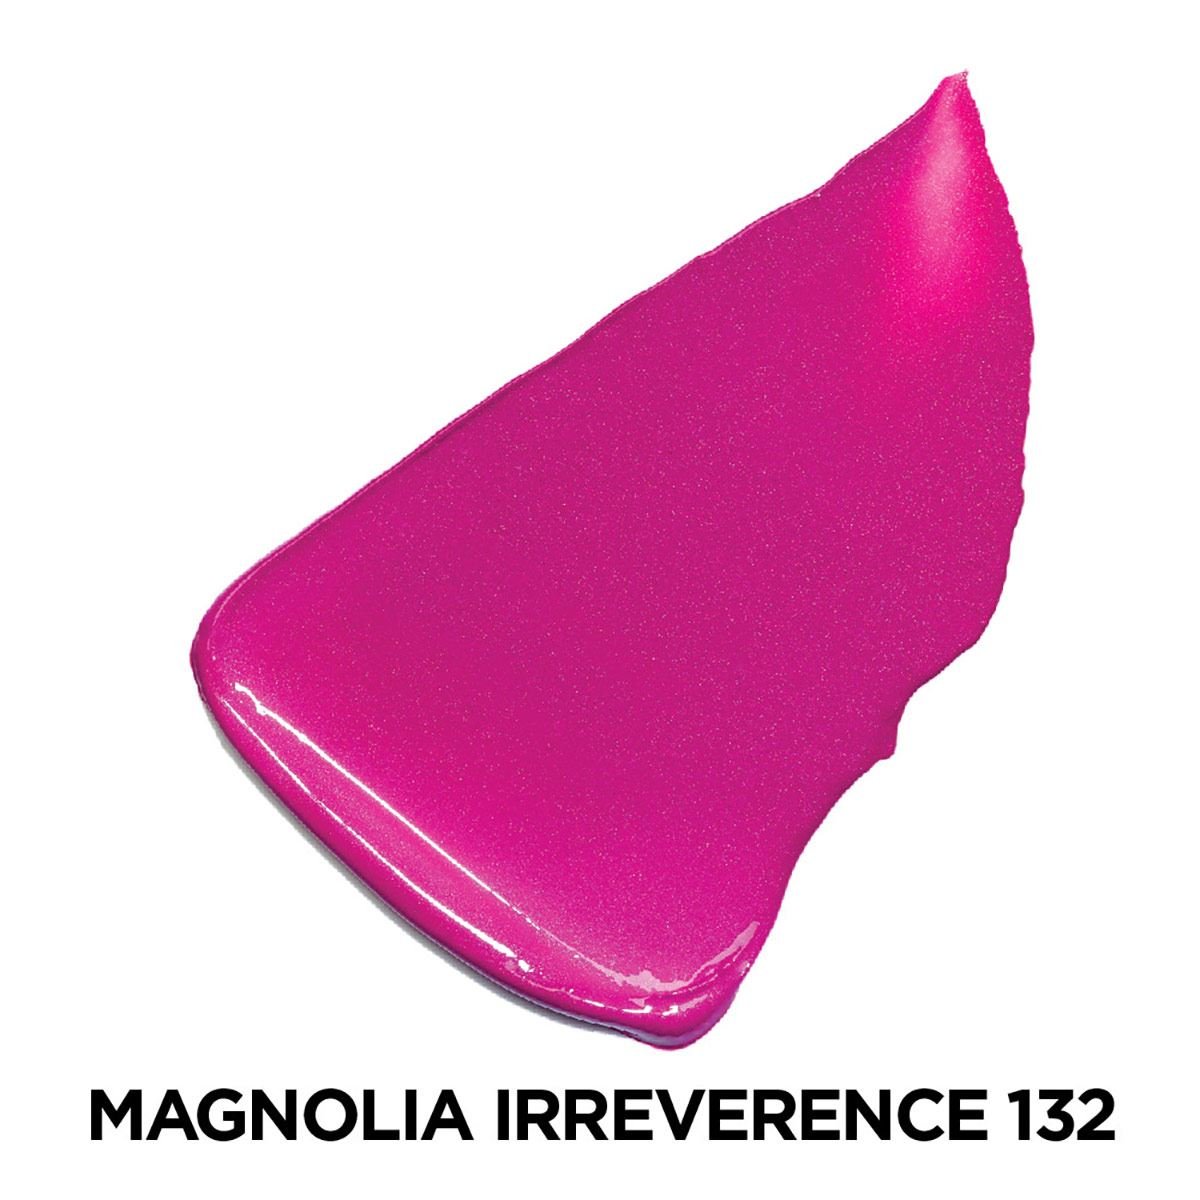 Color riche magnolia irreverence 132